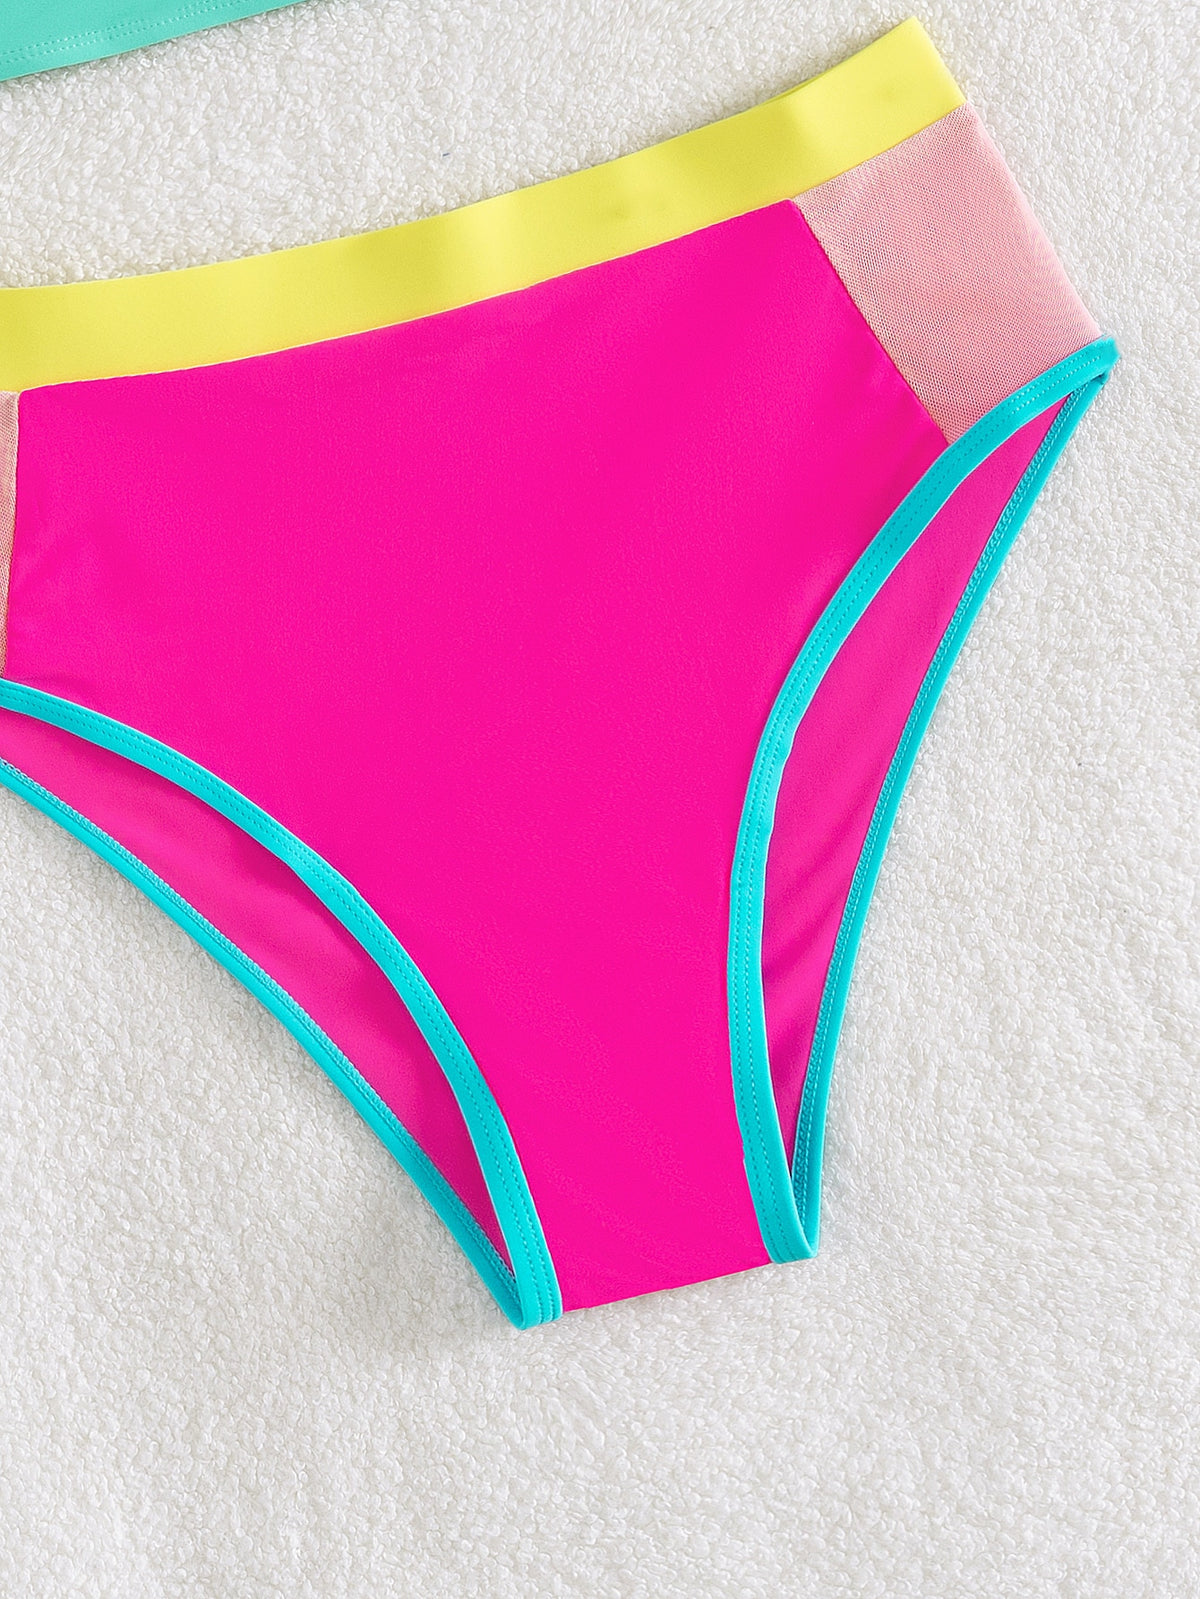 Colorblock Bikini Swimsuit with Contrast Binding